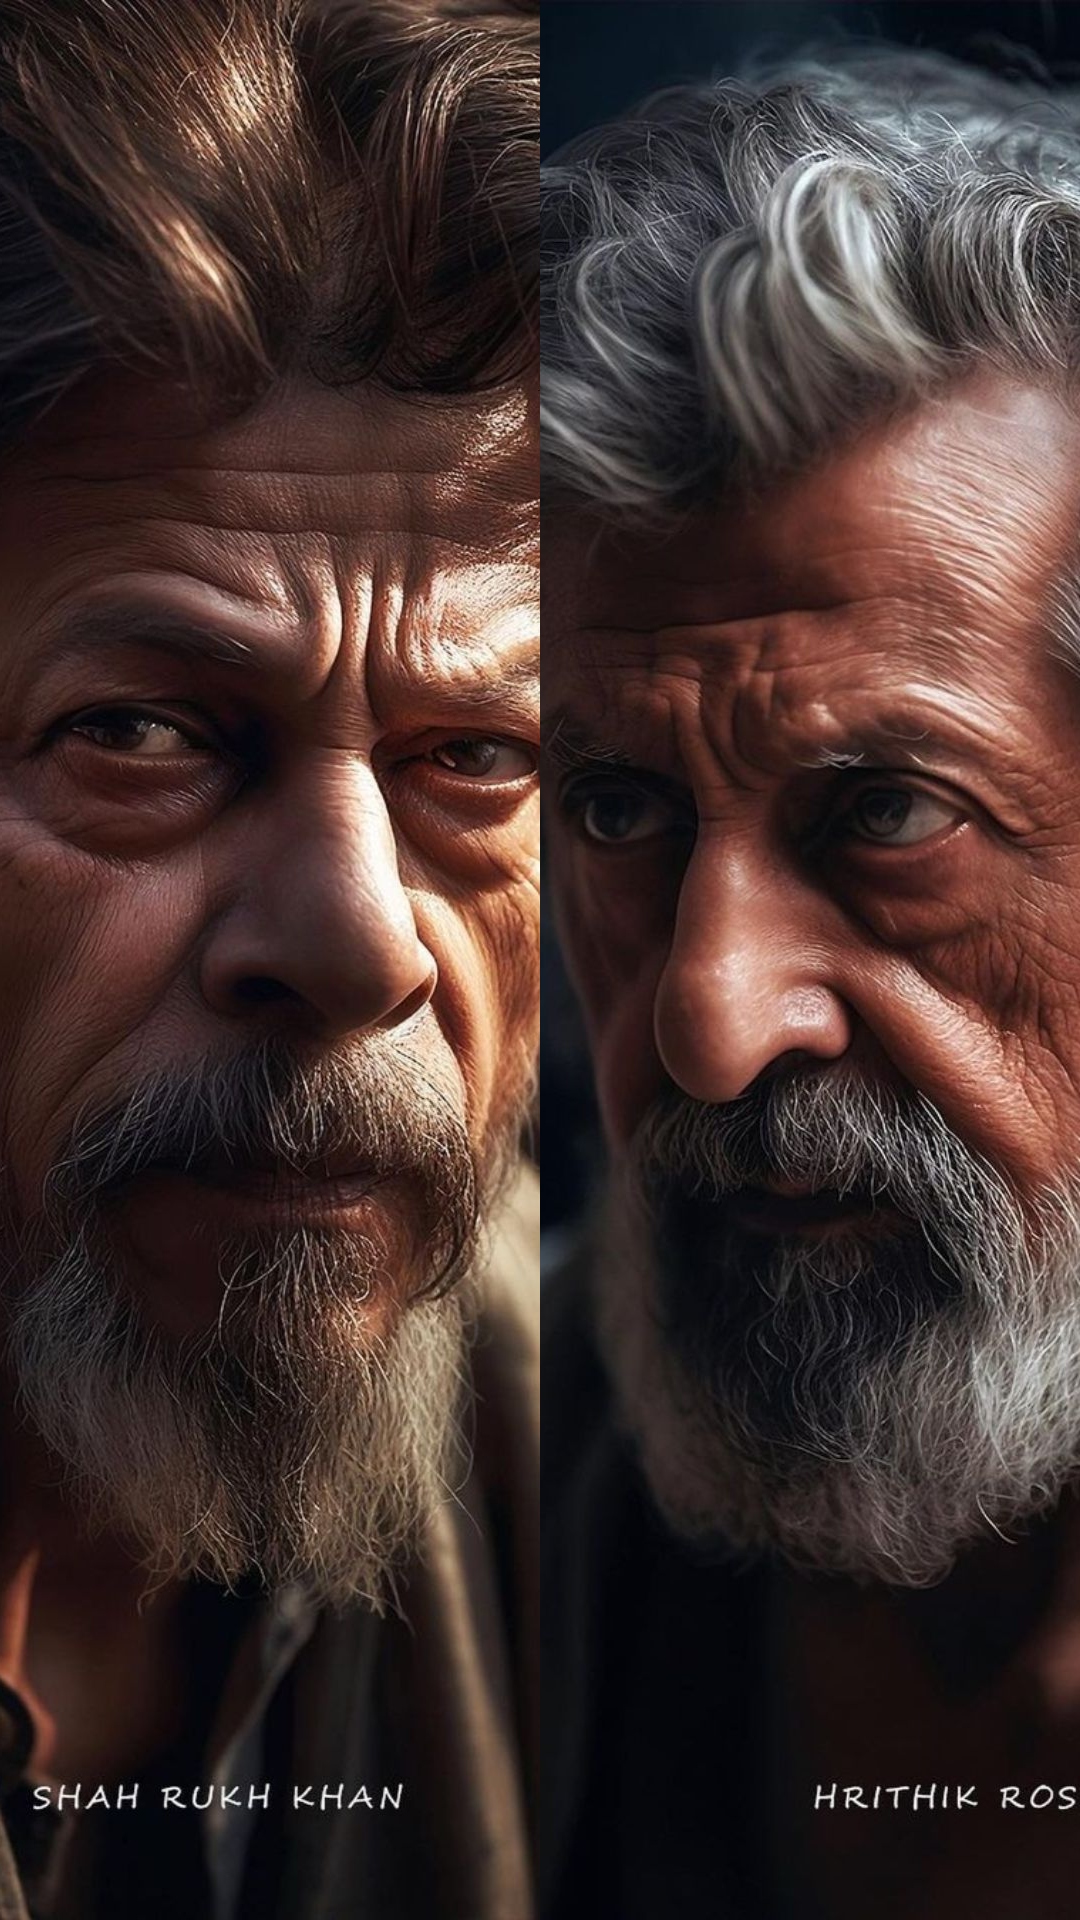 From SRK to Ranbir Kapoor: AI Transforms Indian Film Stars Into Elderly Men